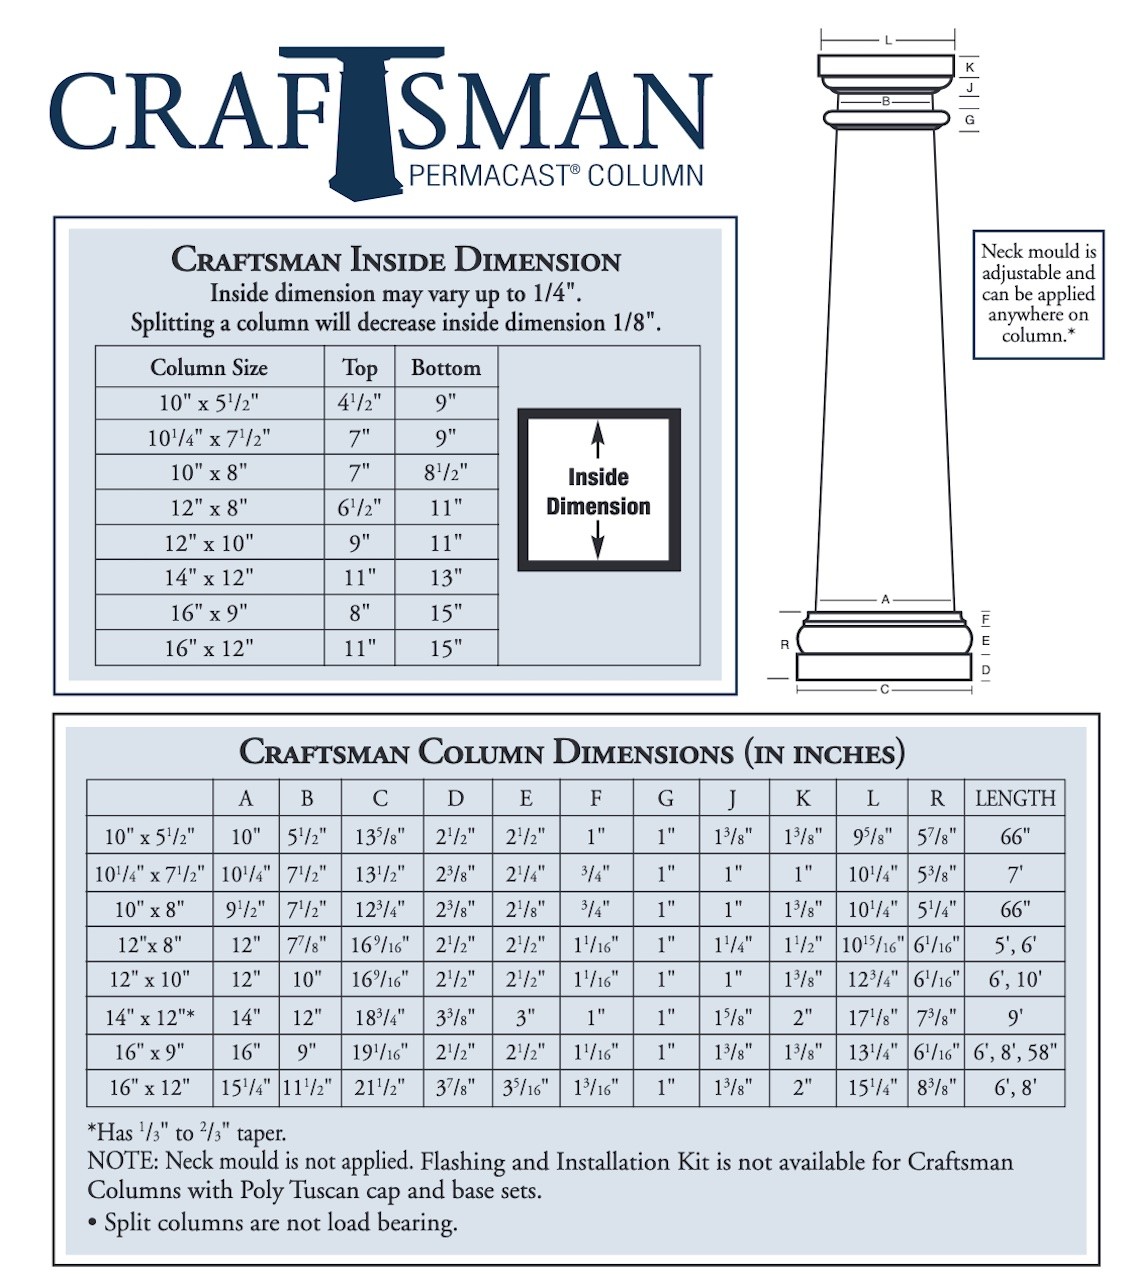 10/8 HB&G PermaCast Craftsman Column